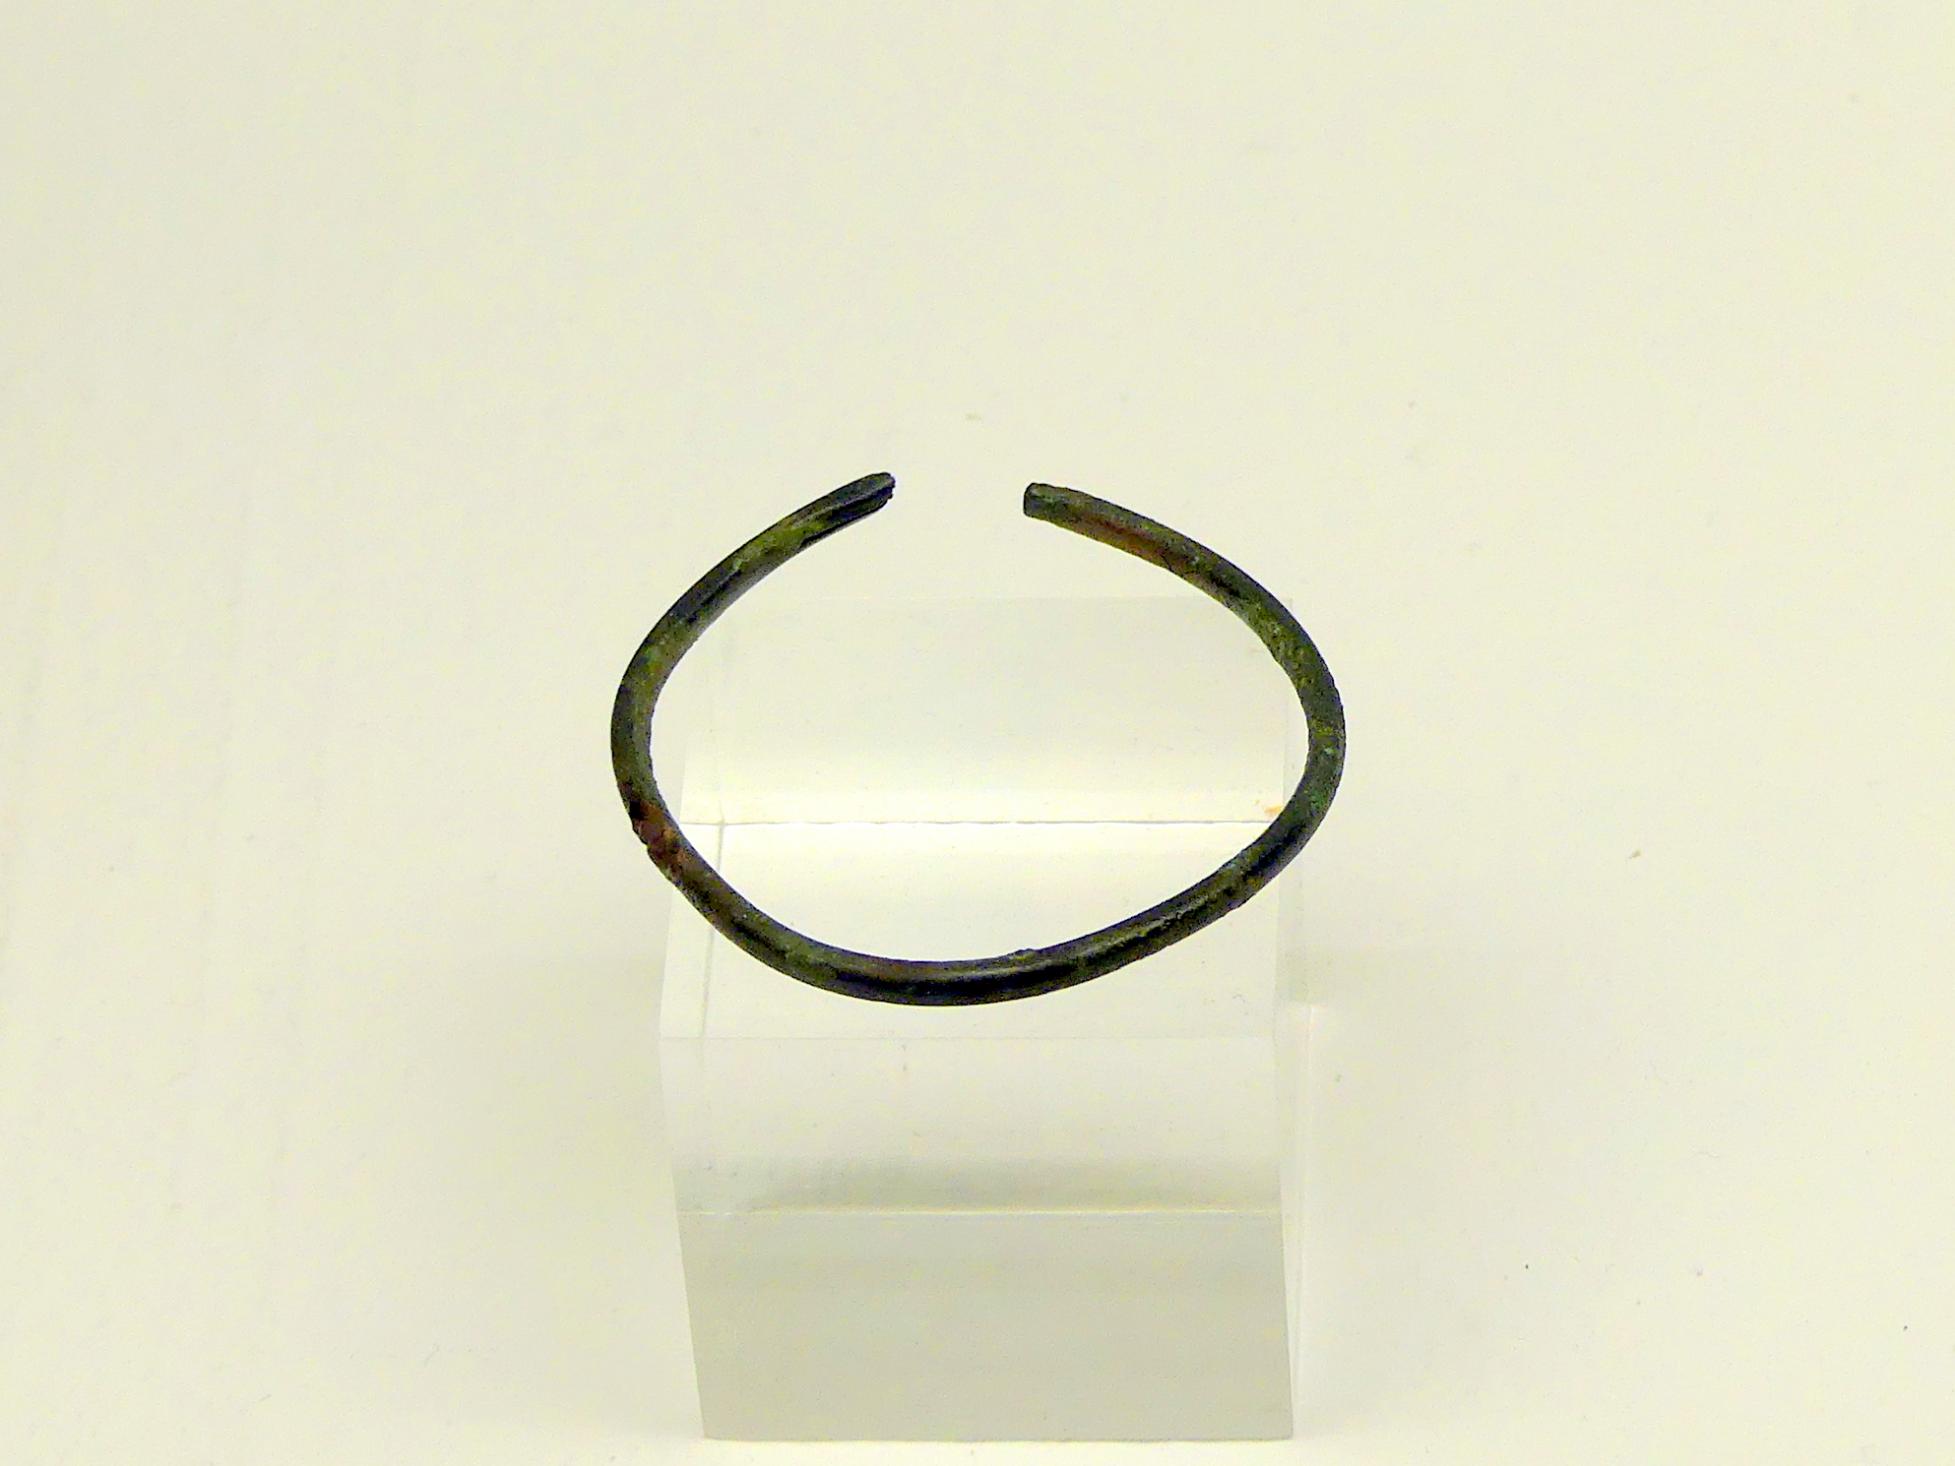 Bronzearmring, Spätlatènezeit D, 700 - 100 v. Chr., Bild 1/2